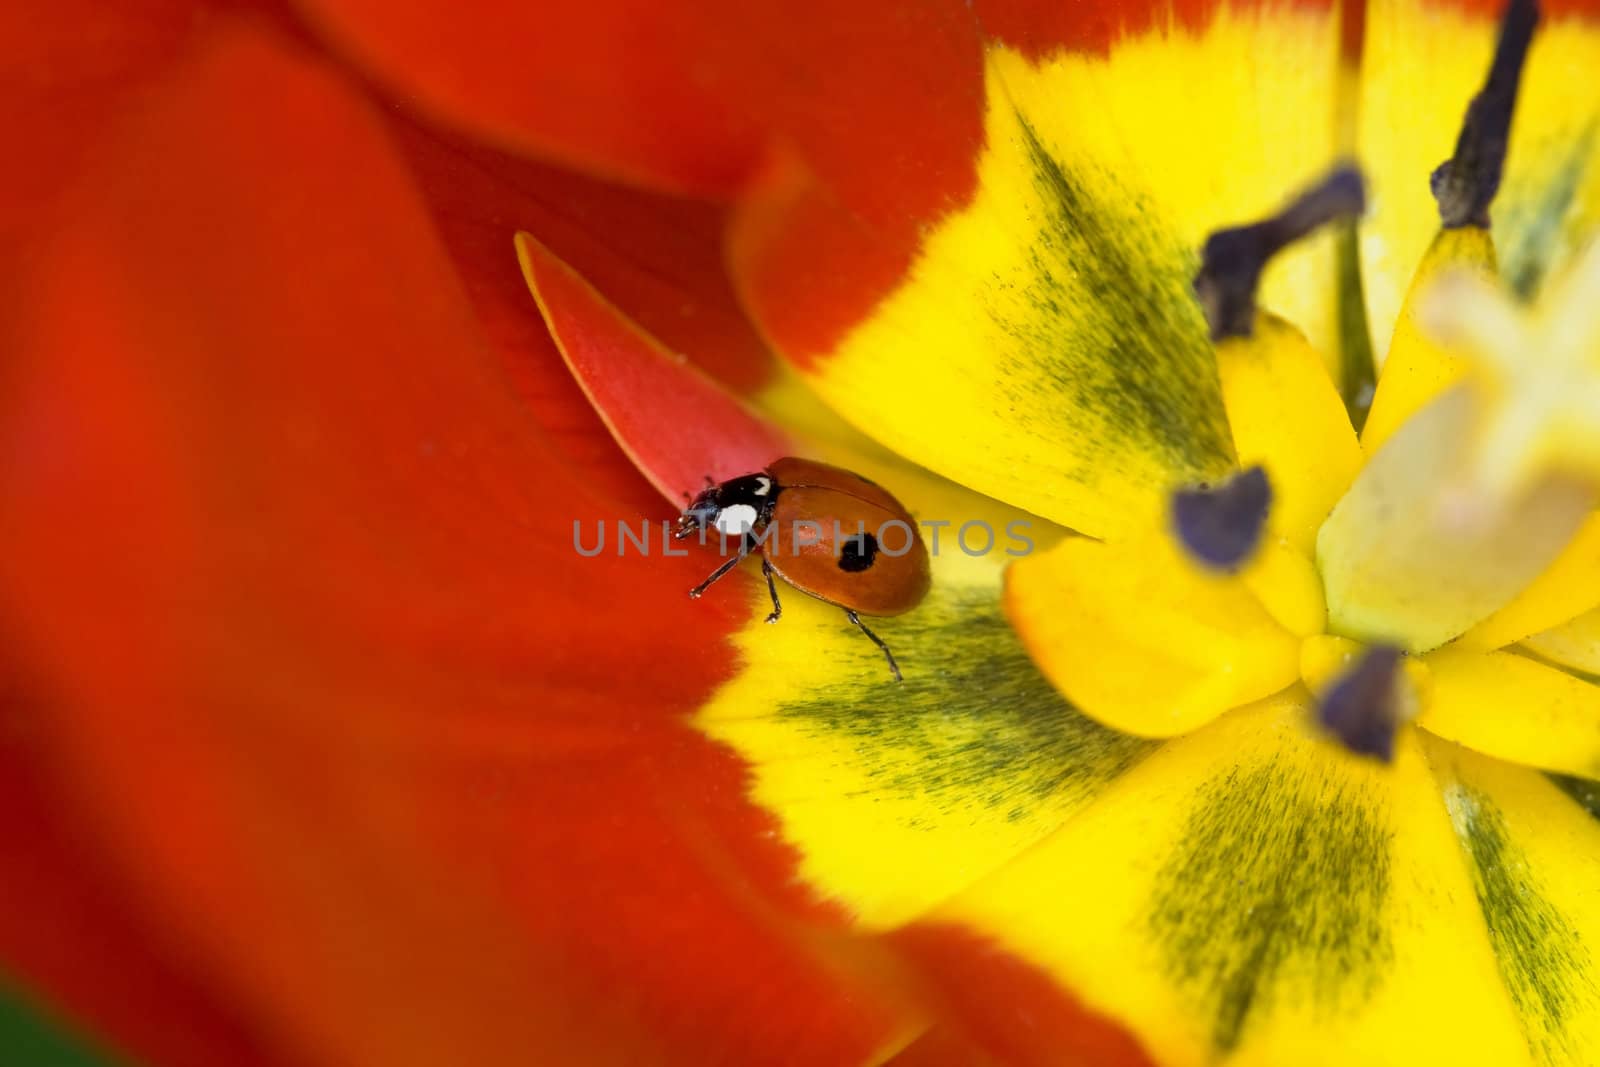 Ladybug on tulip flower by Sazonoff